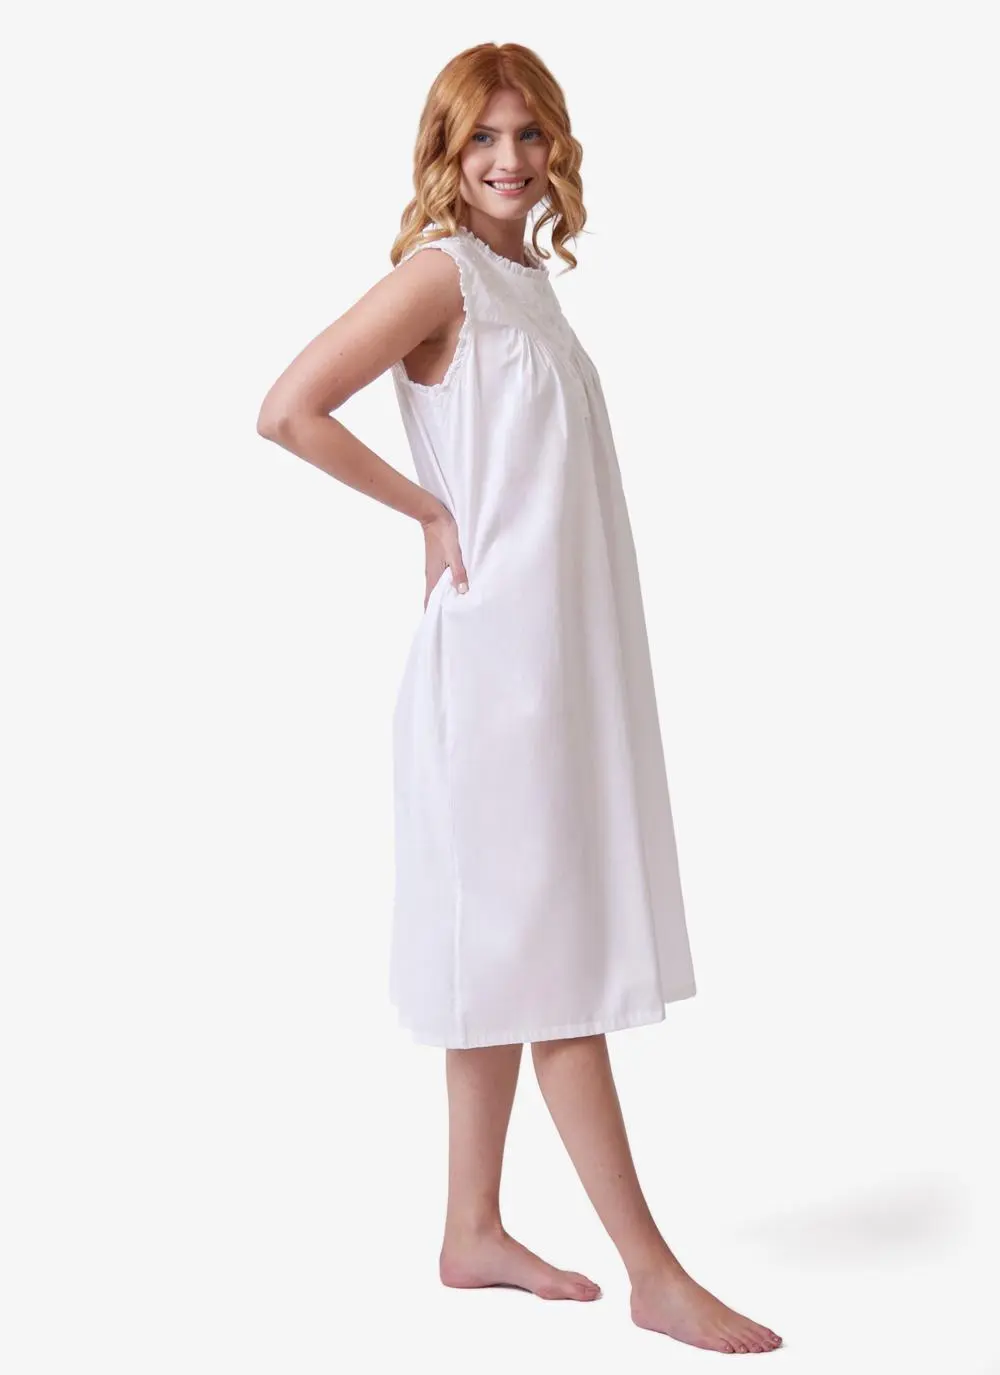 Elegant Lace Slip: Women's Silk and Cotton Sleep Dress